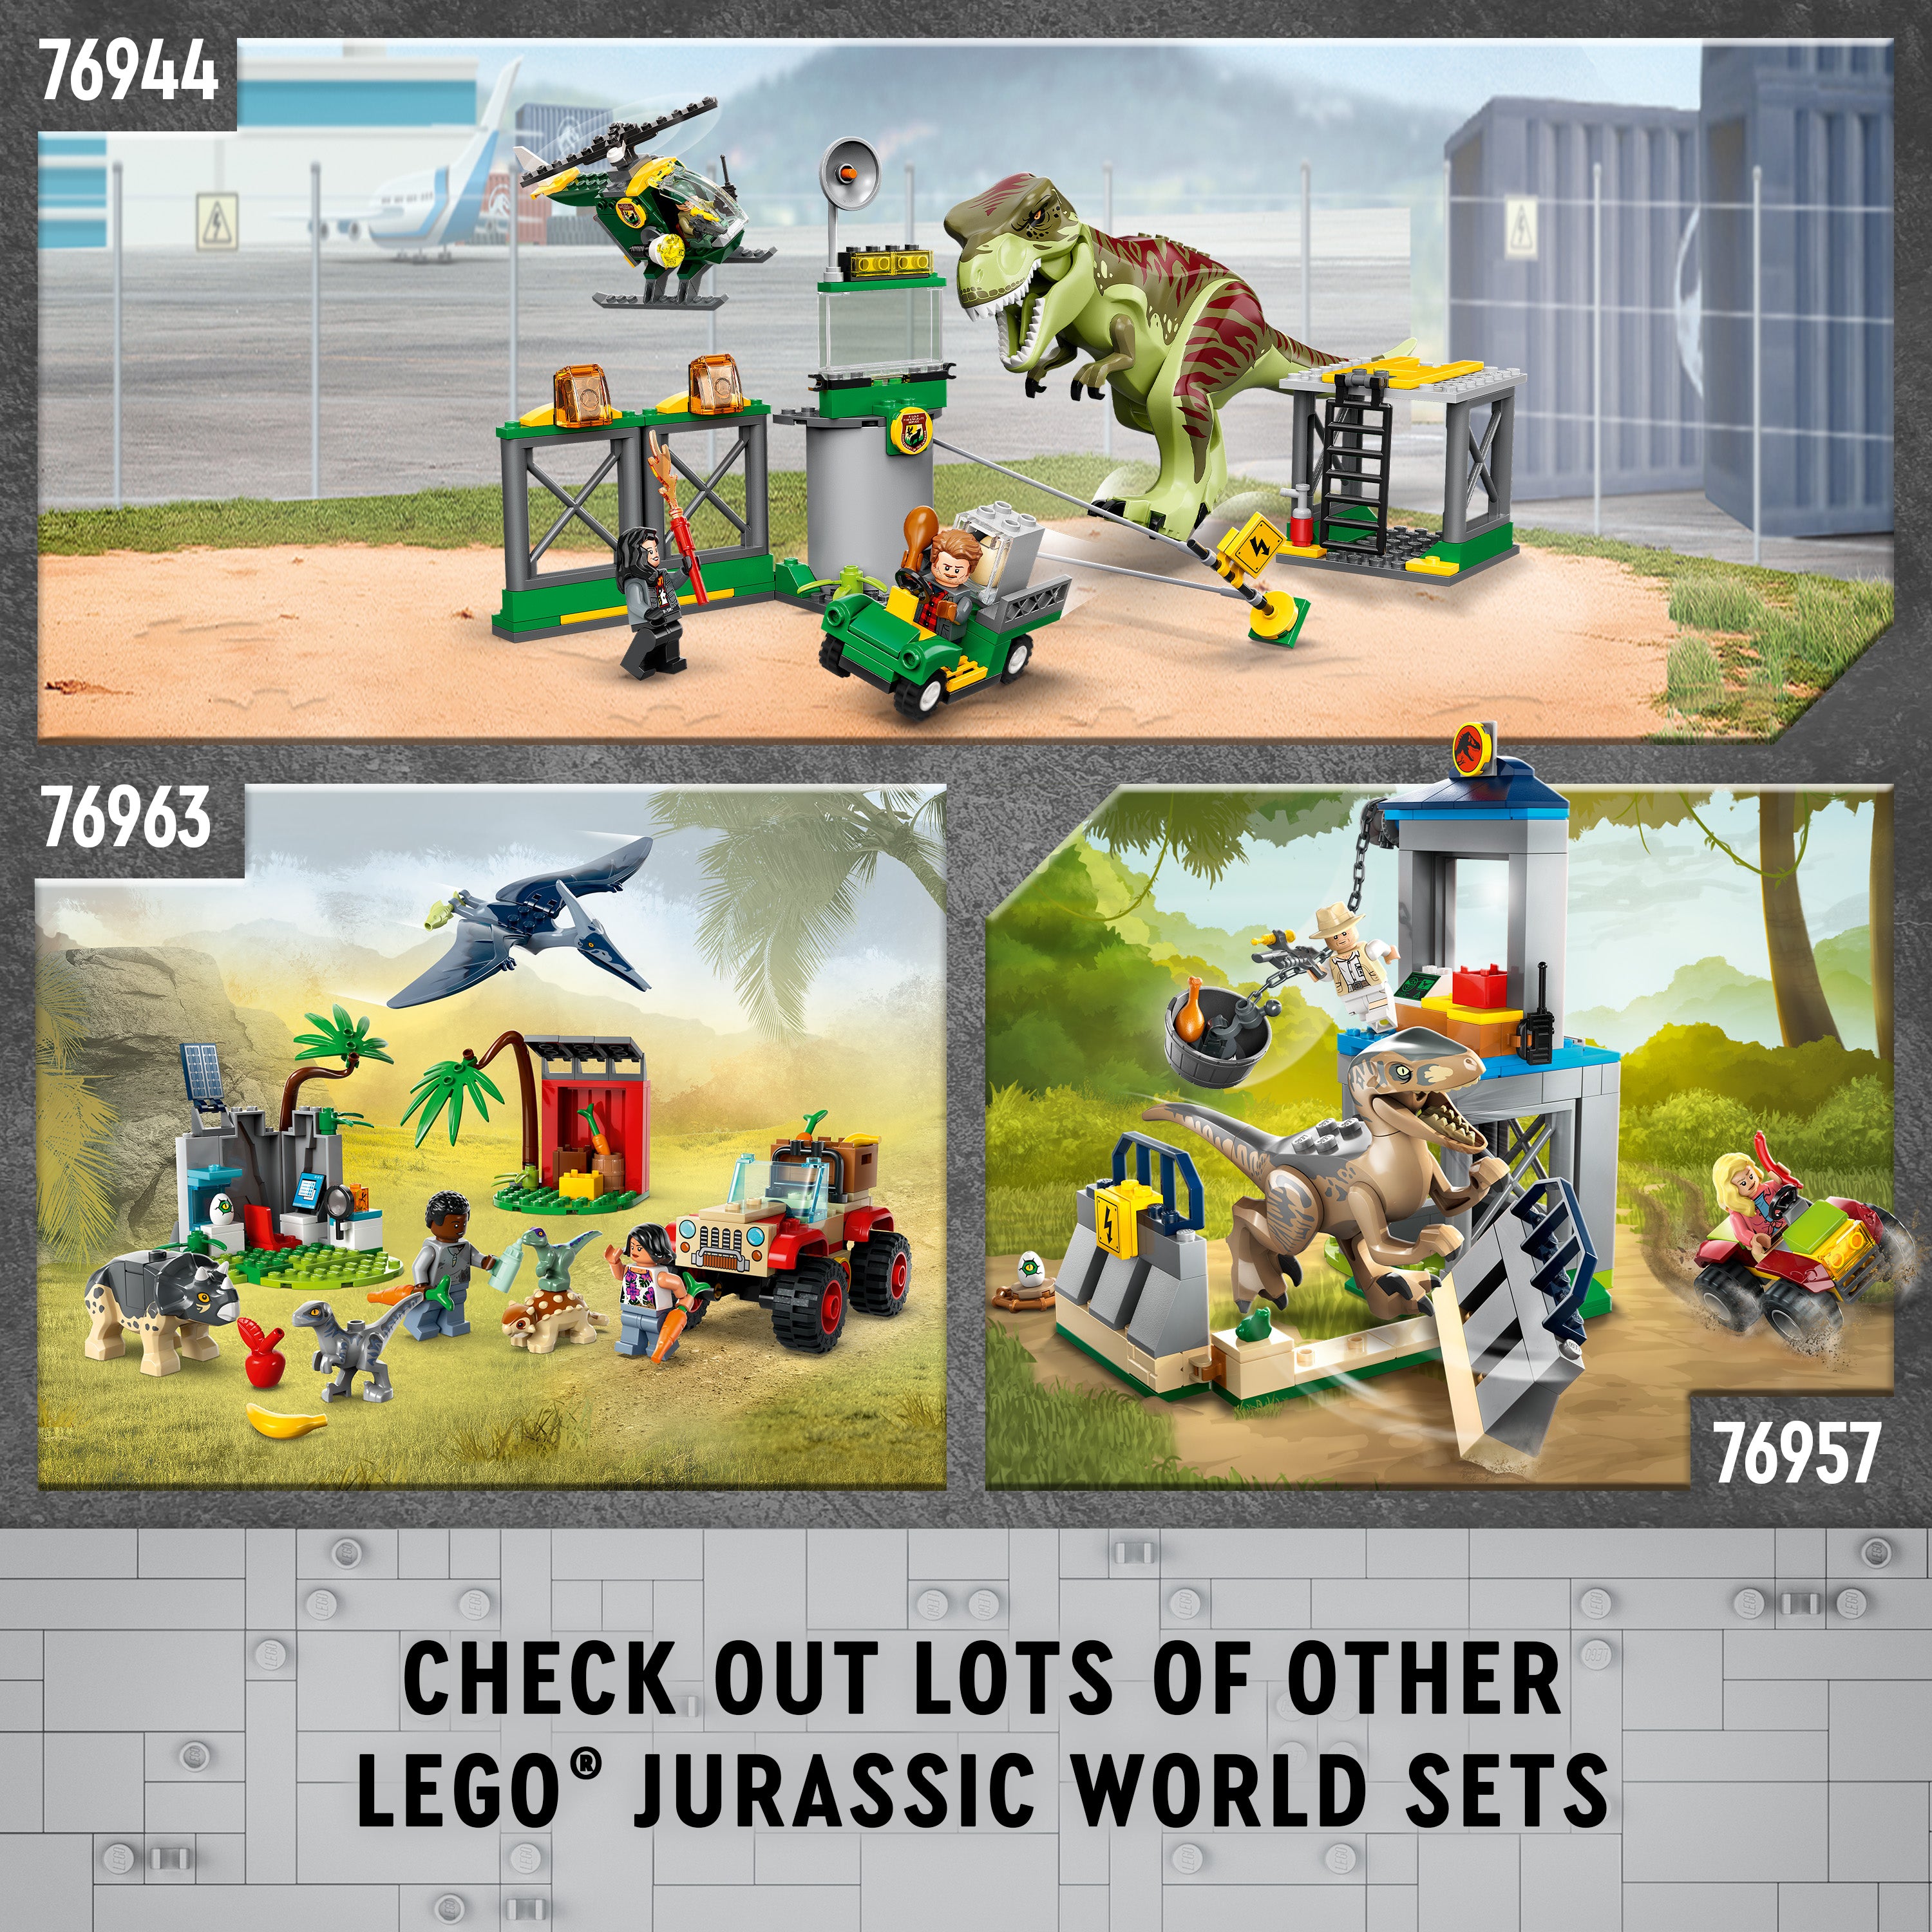 Lego 76963 Baby Dinosaur Rescue Centre